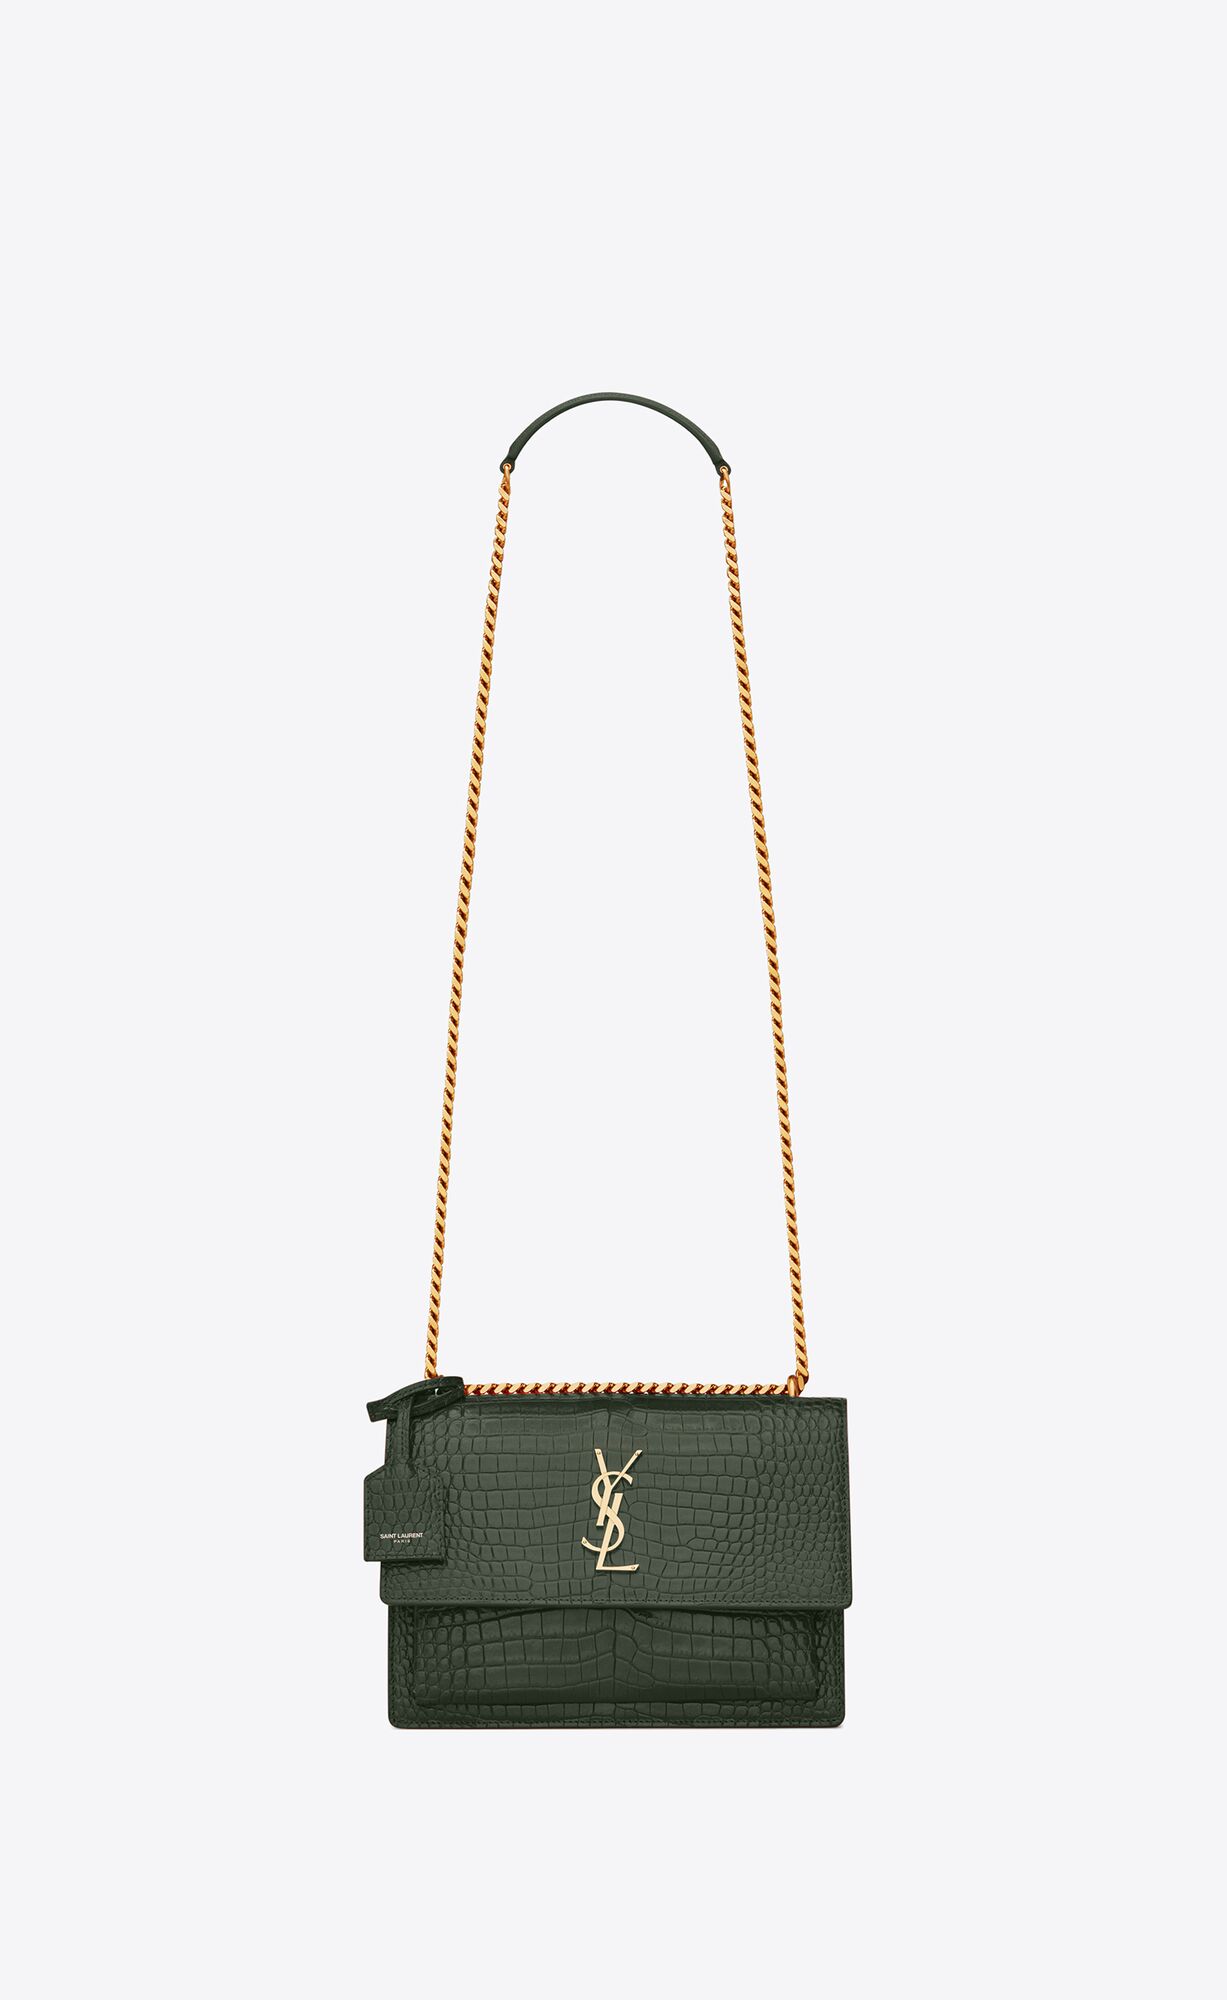 Saint Laurent Sunset Medium Chain Bag In Crocodile Embossed Shiny Leather – Mint – 442906DND0J3144